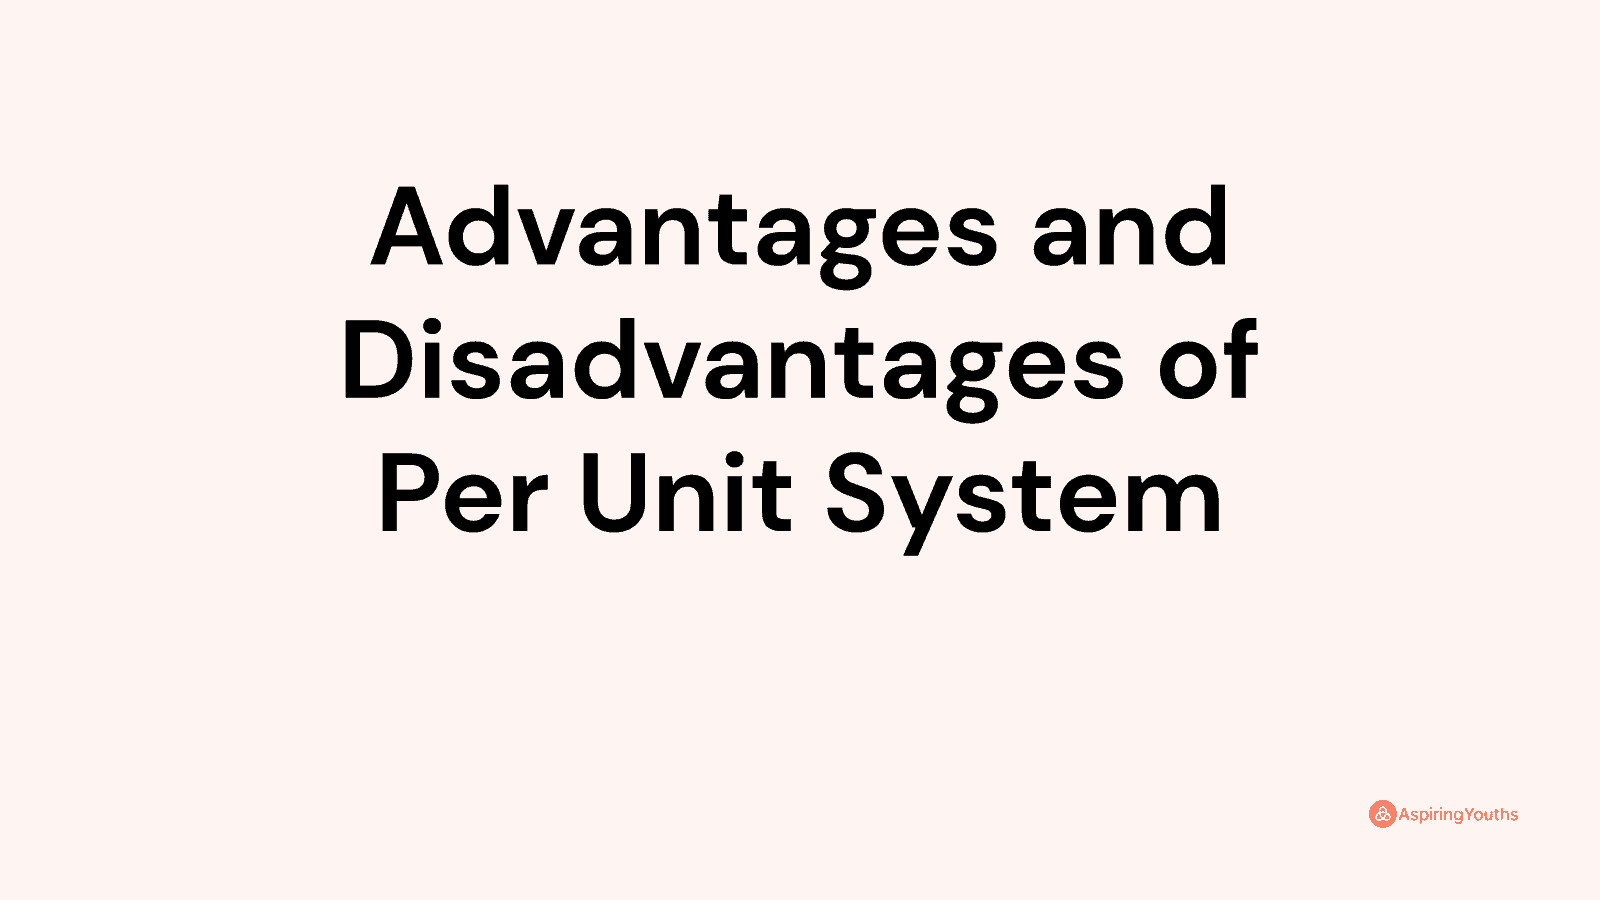 Advantages and disadvantages of Per Unit System